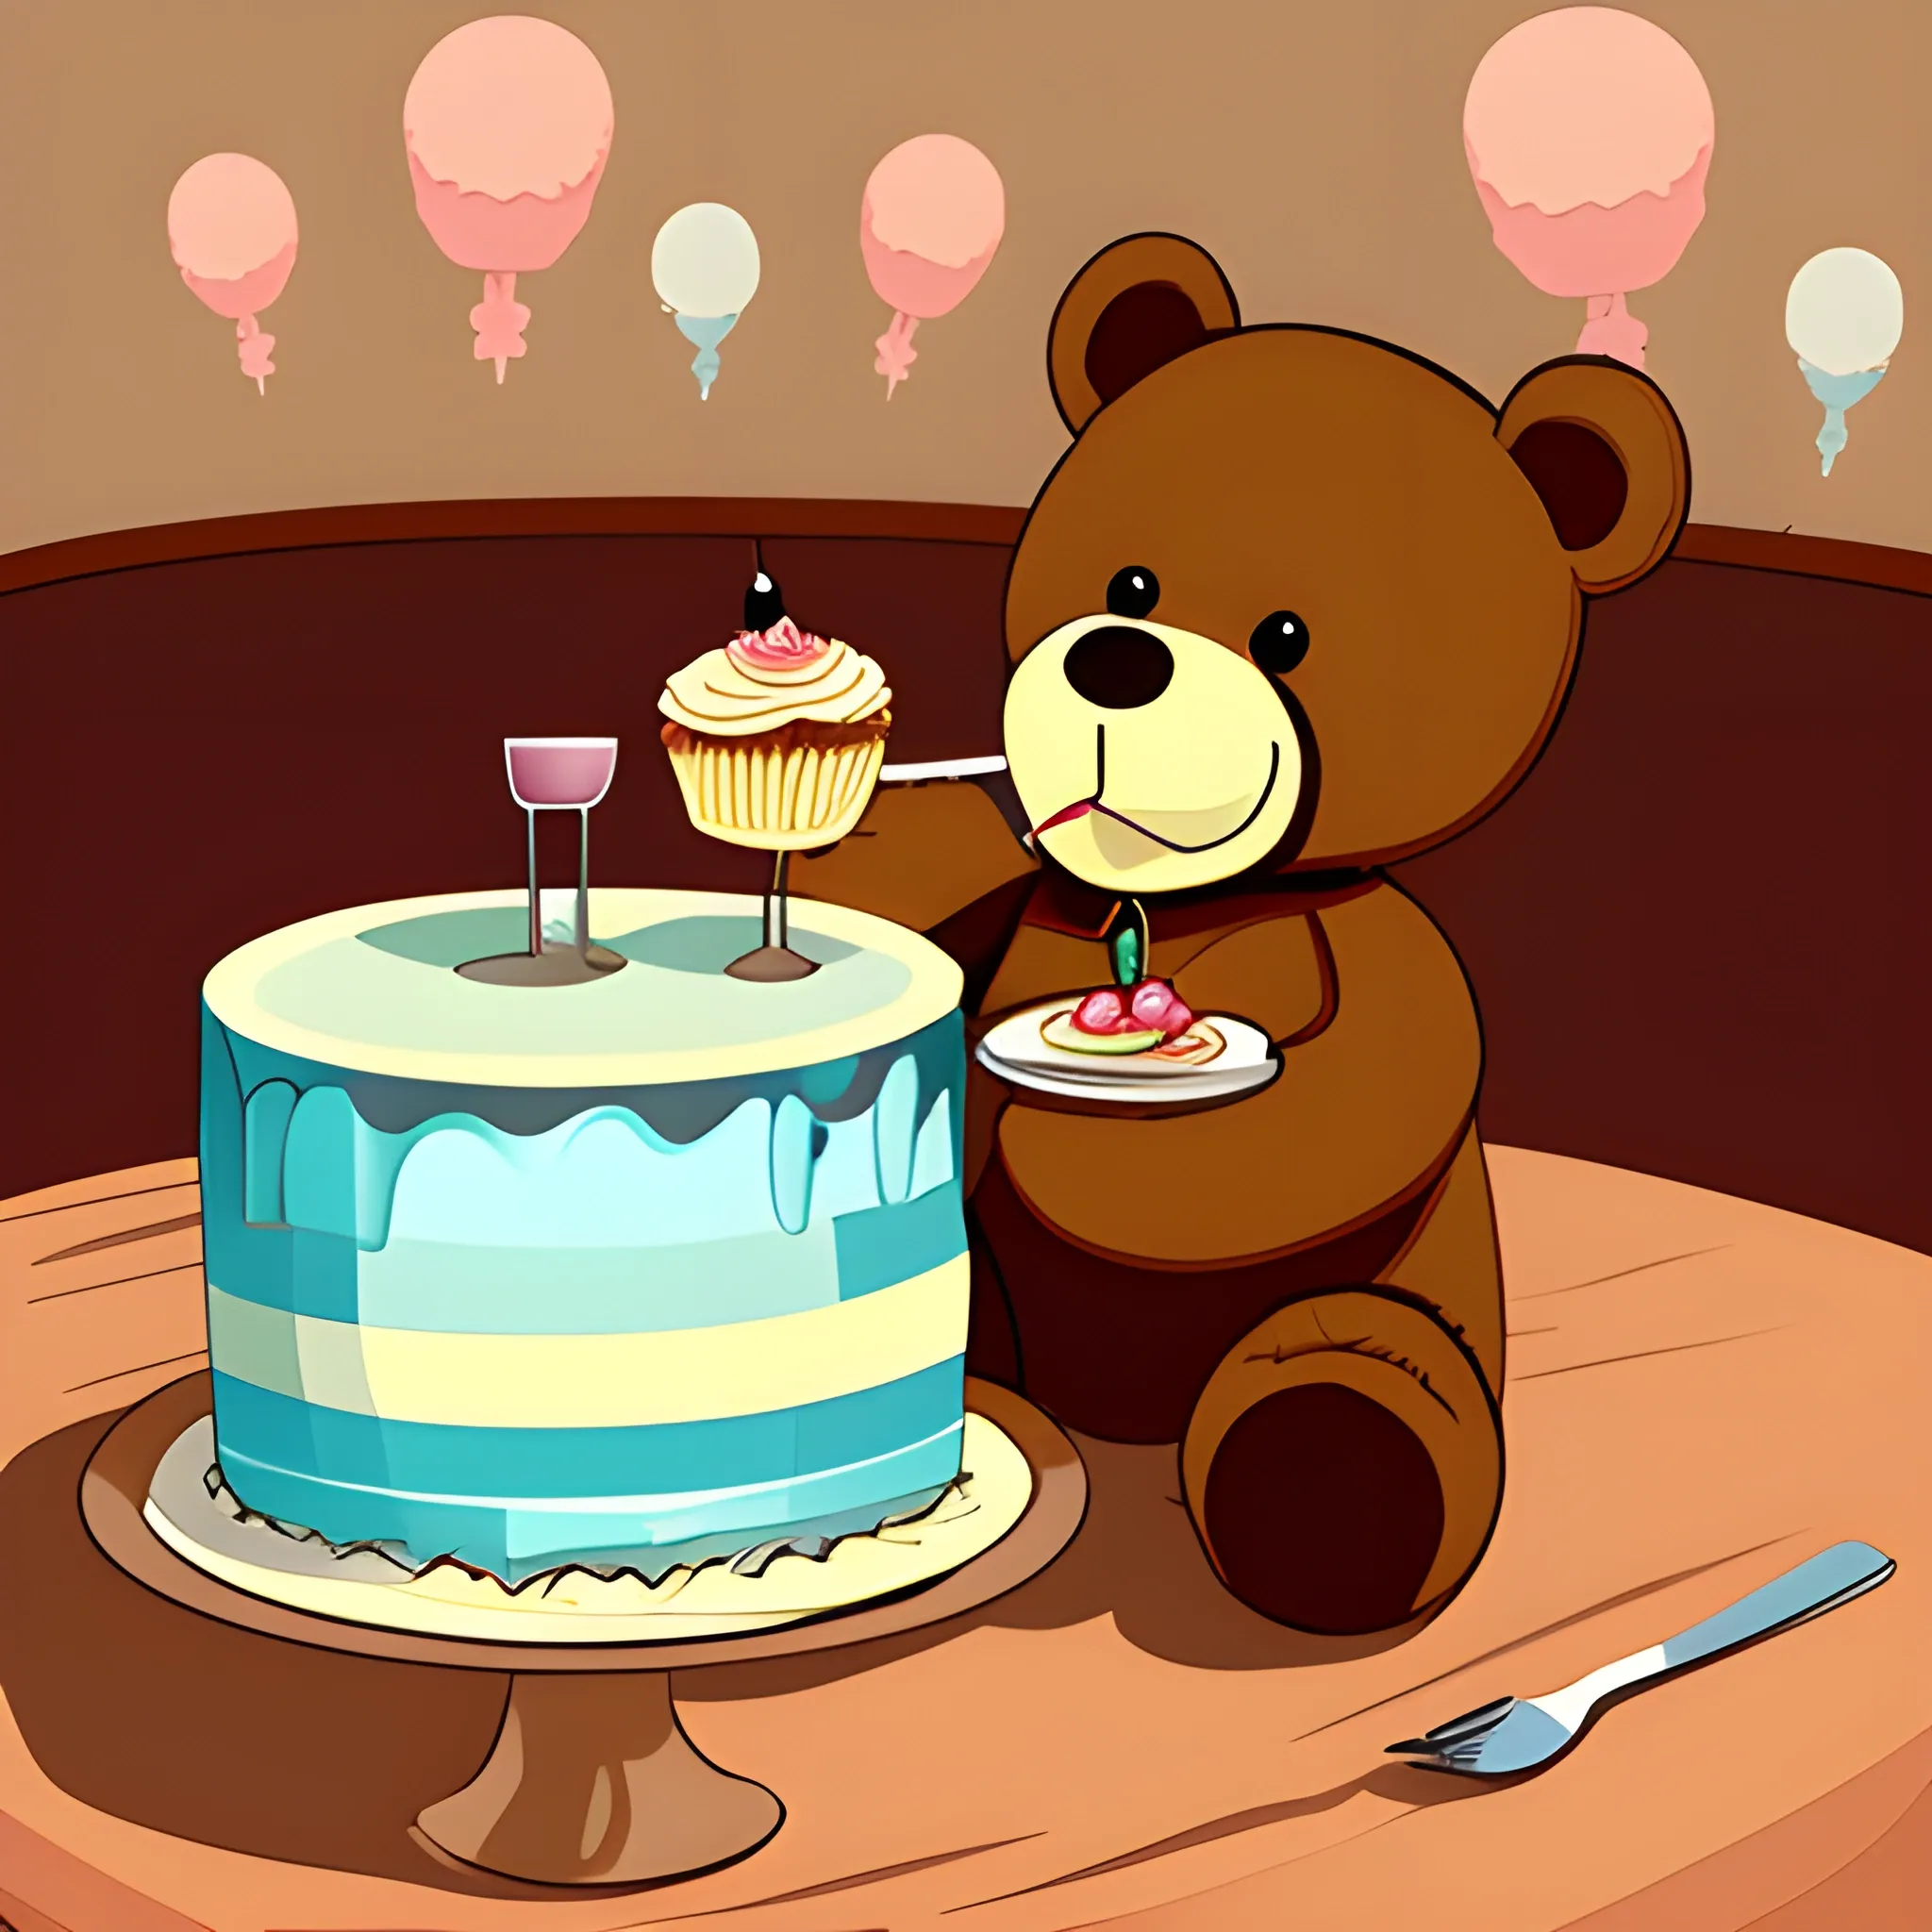 Watch: Bear crashes 2-year-old's birthday party, eats cupcakes - UPI.com